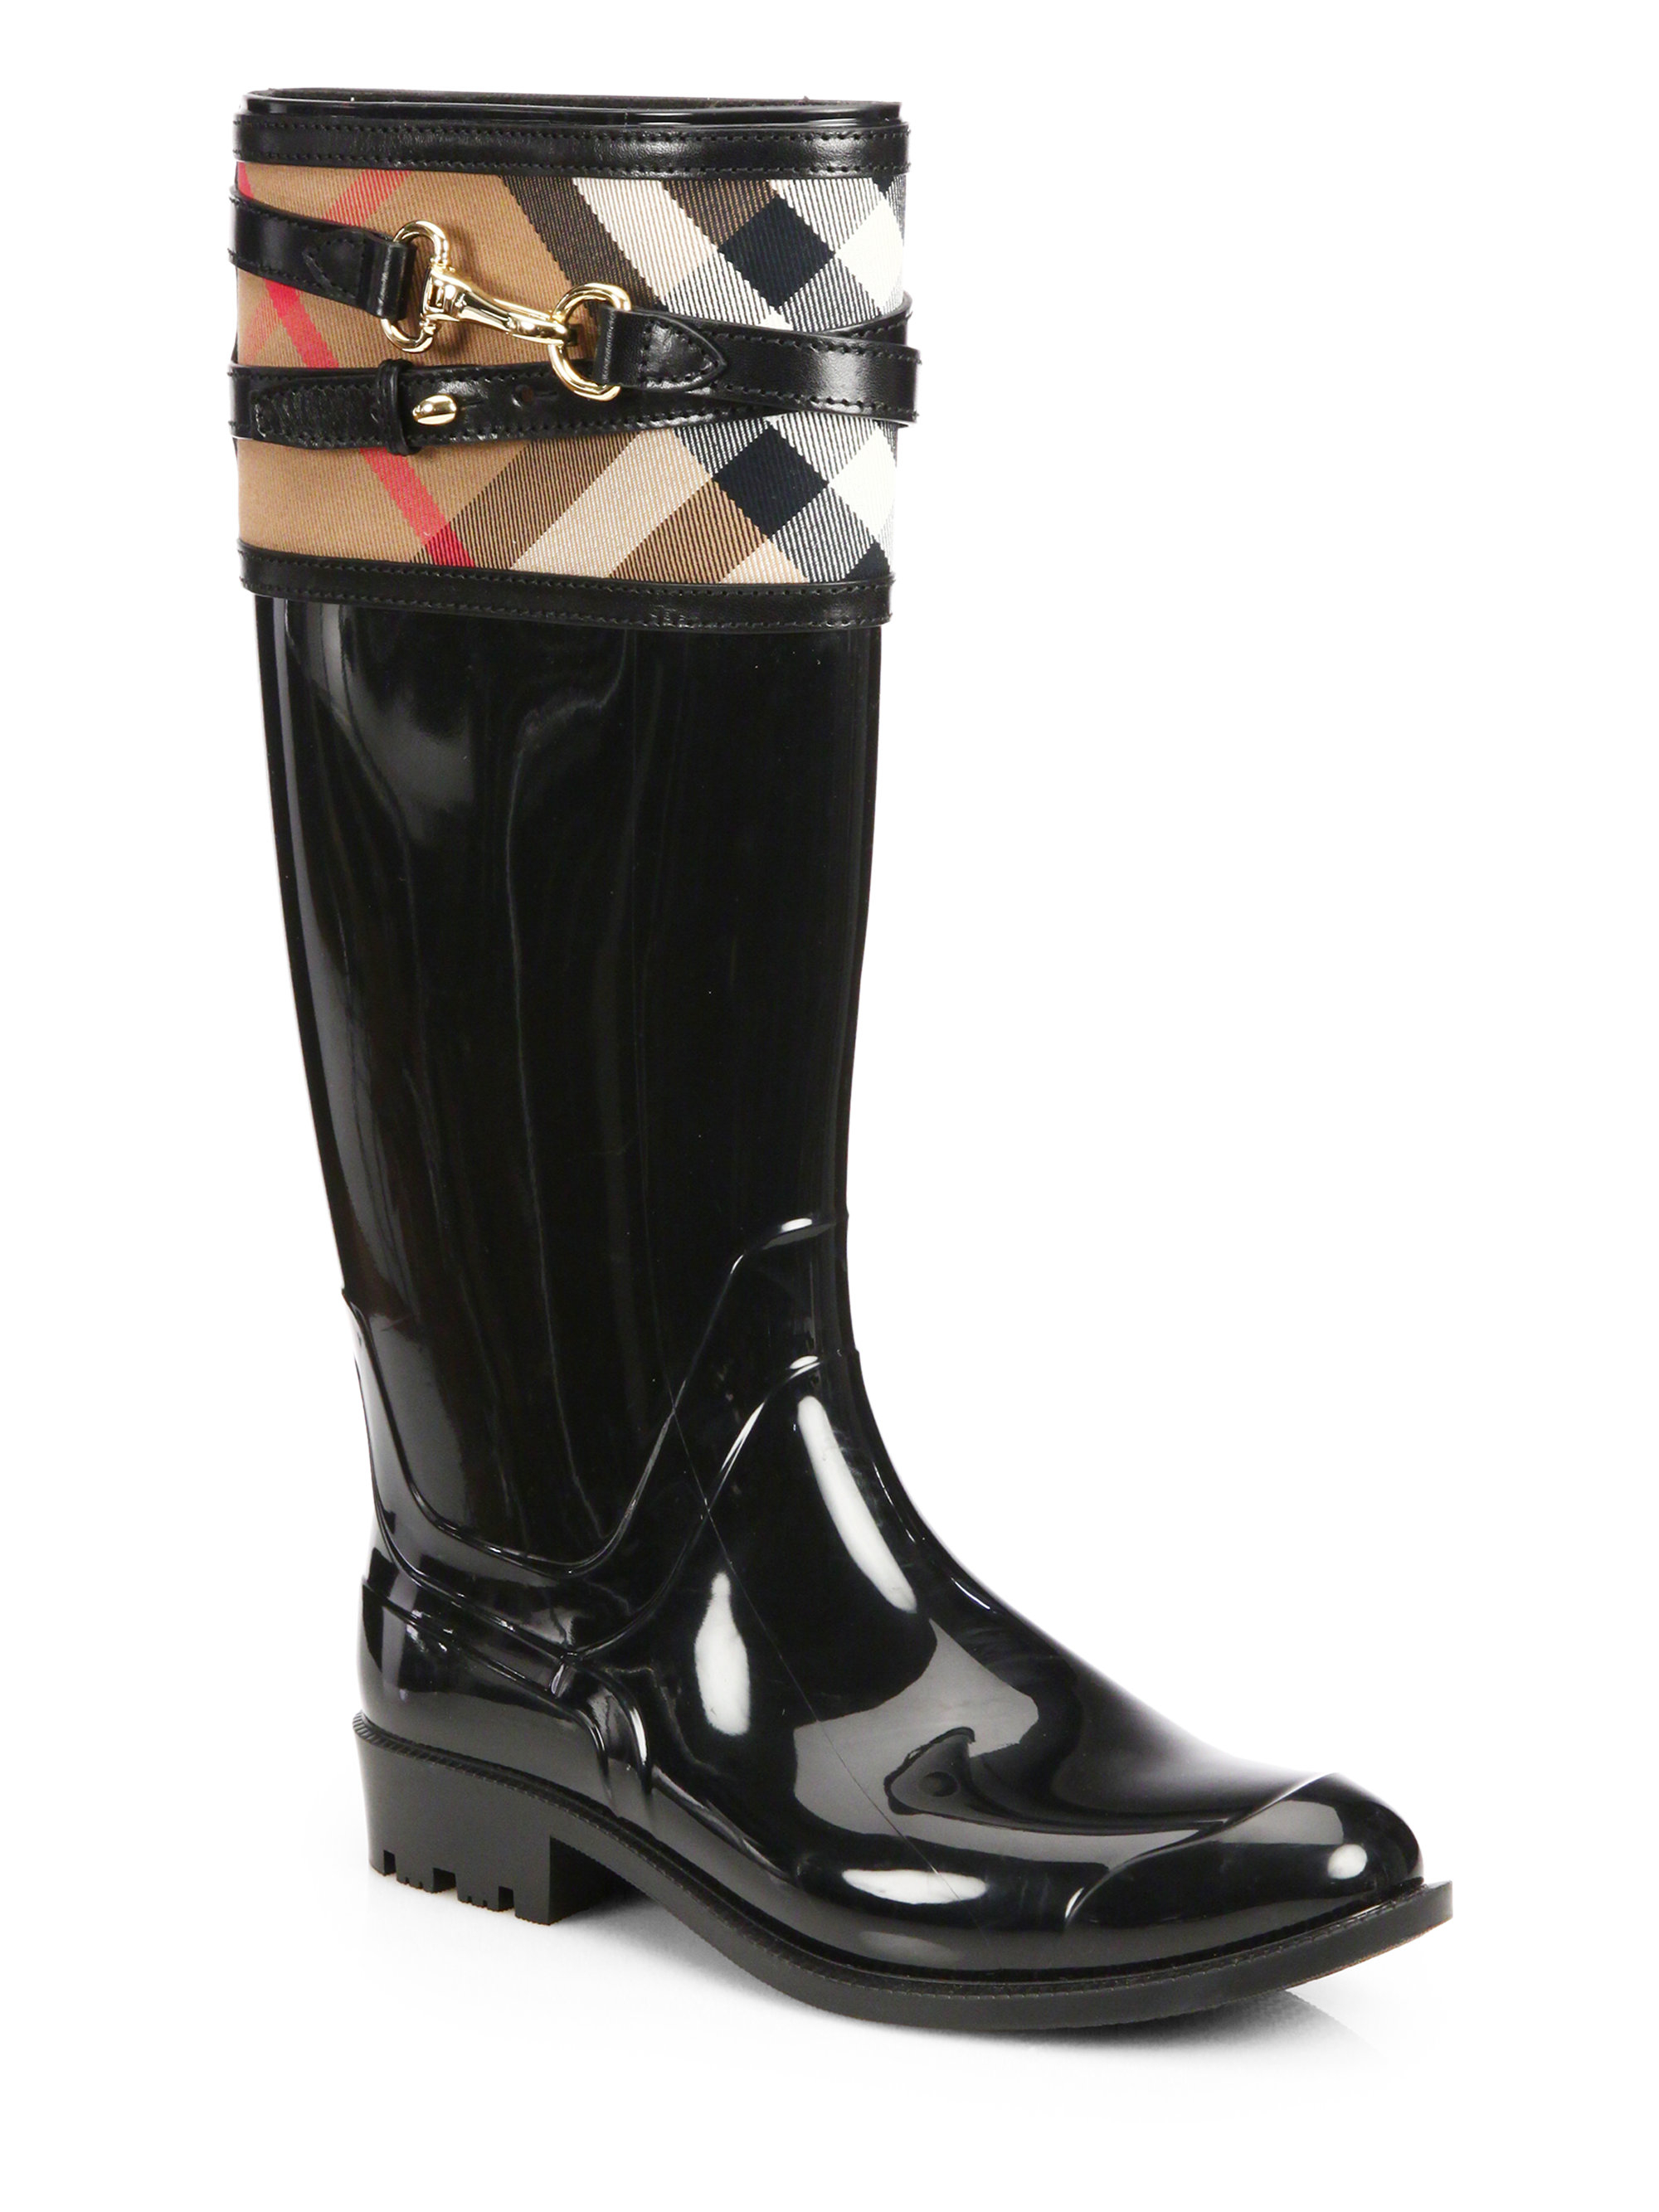 Burberry Elderford Check Rain Boots in Black (Brown) - Lyst